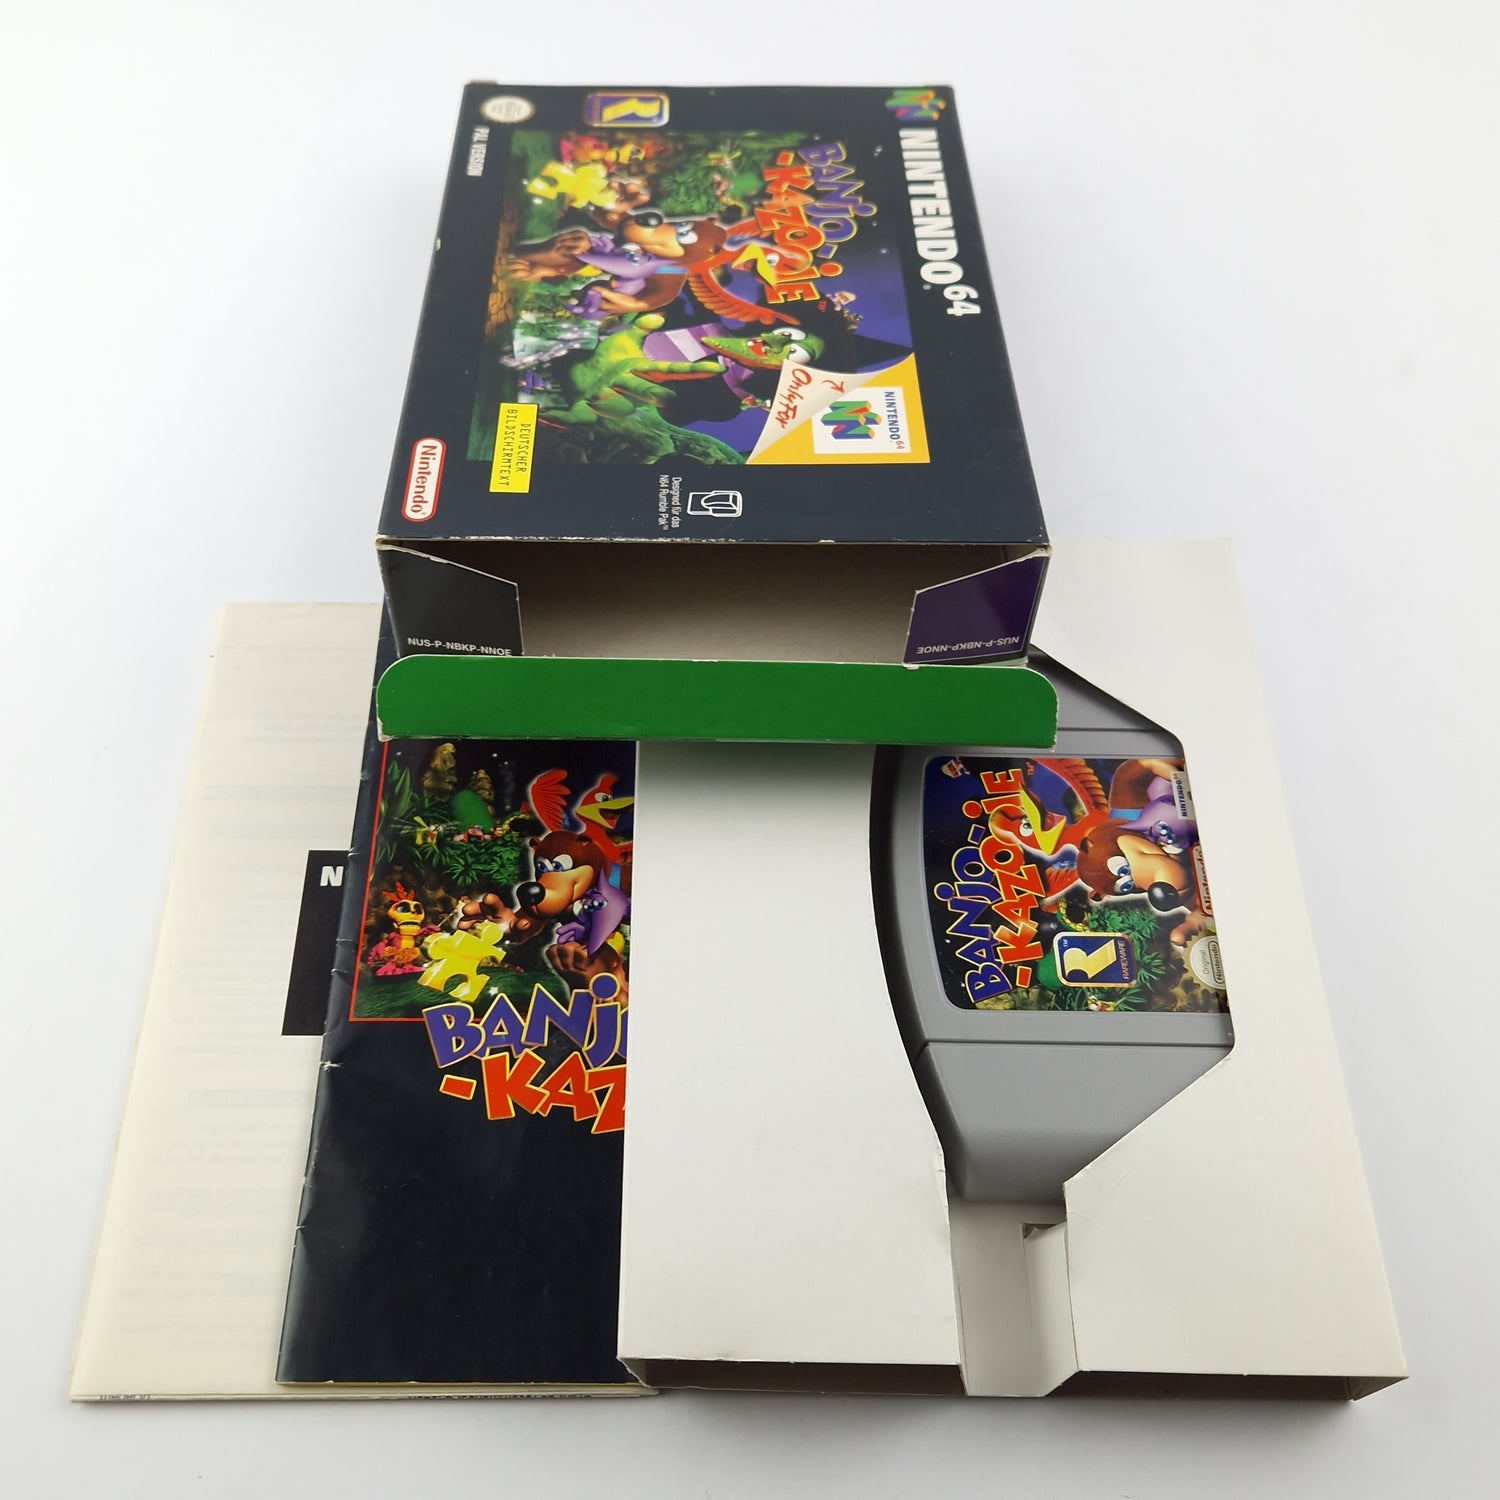 Nintendo 64 Game: Banjo Kazooie - Module Instructions OVP / PAL N64 Game